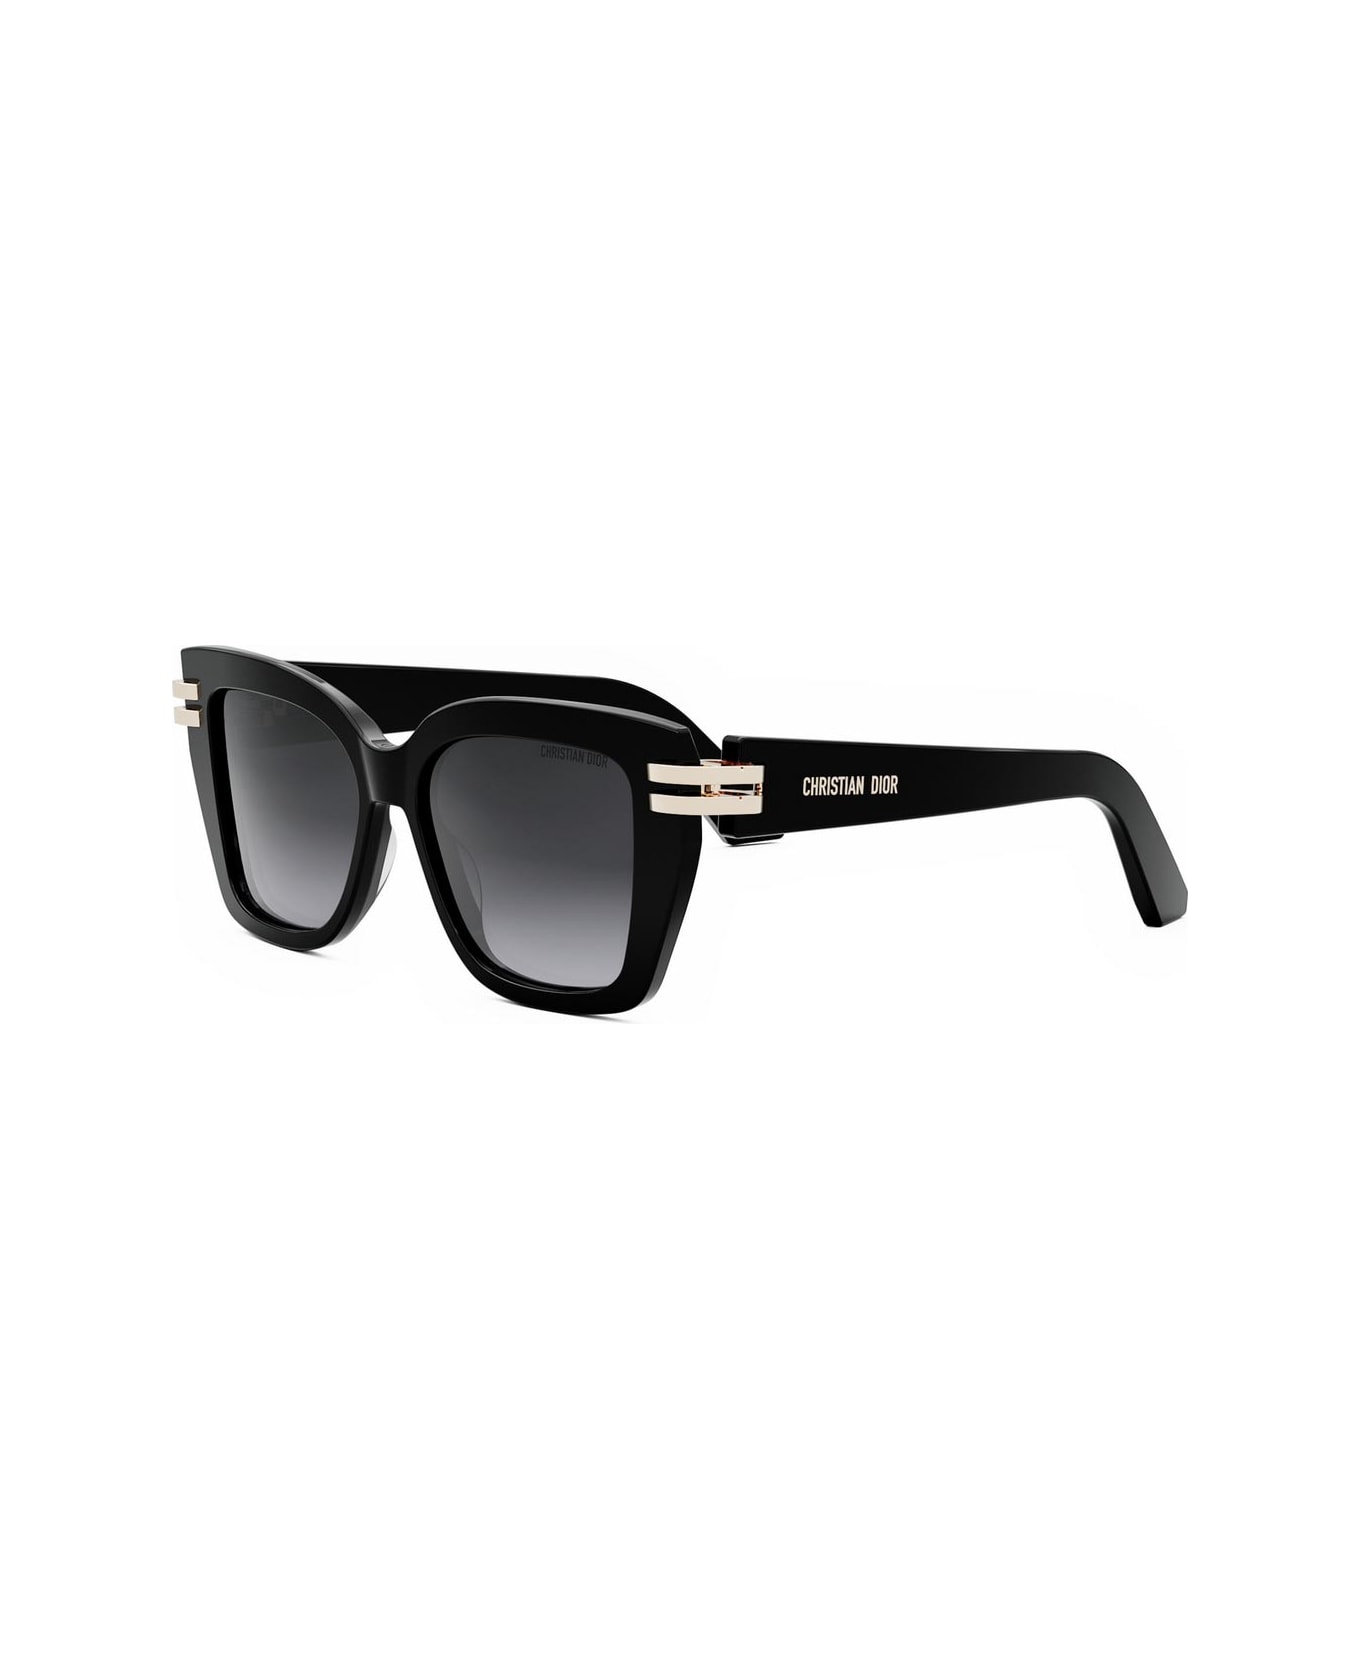 Dior Eyewear Sunglasses - Nero/Grigio sfumato